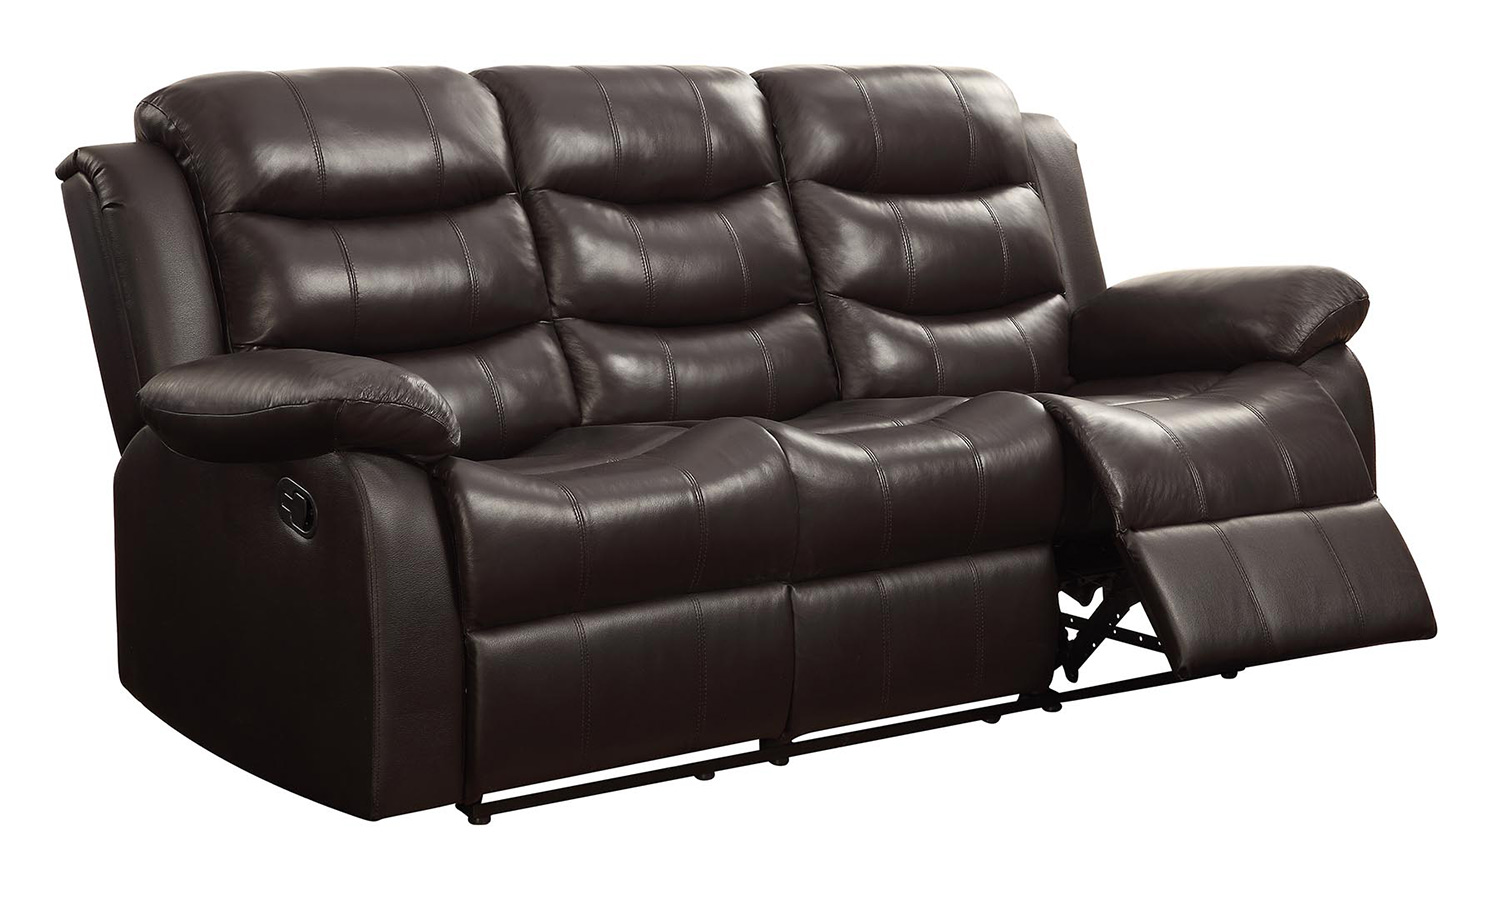 Coaster Rodman Motion Sofa - Dark brown